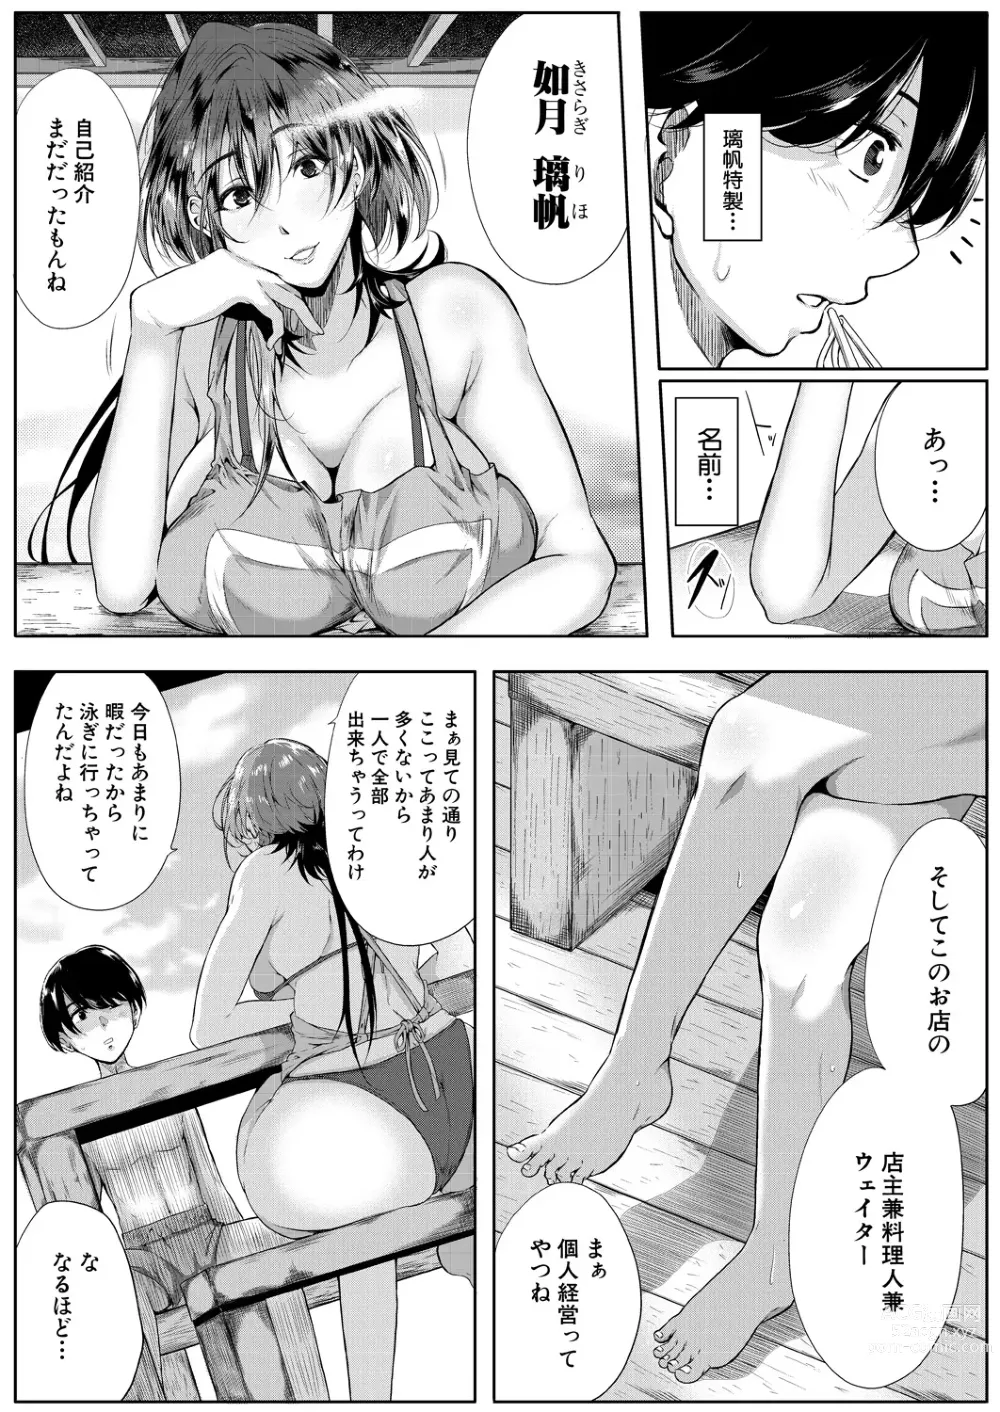 Page 7 of manga Strawberry Mermaid Ch.1-2